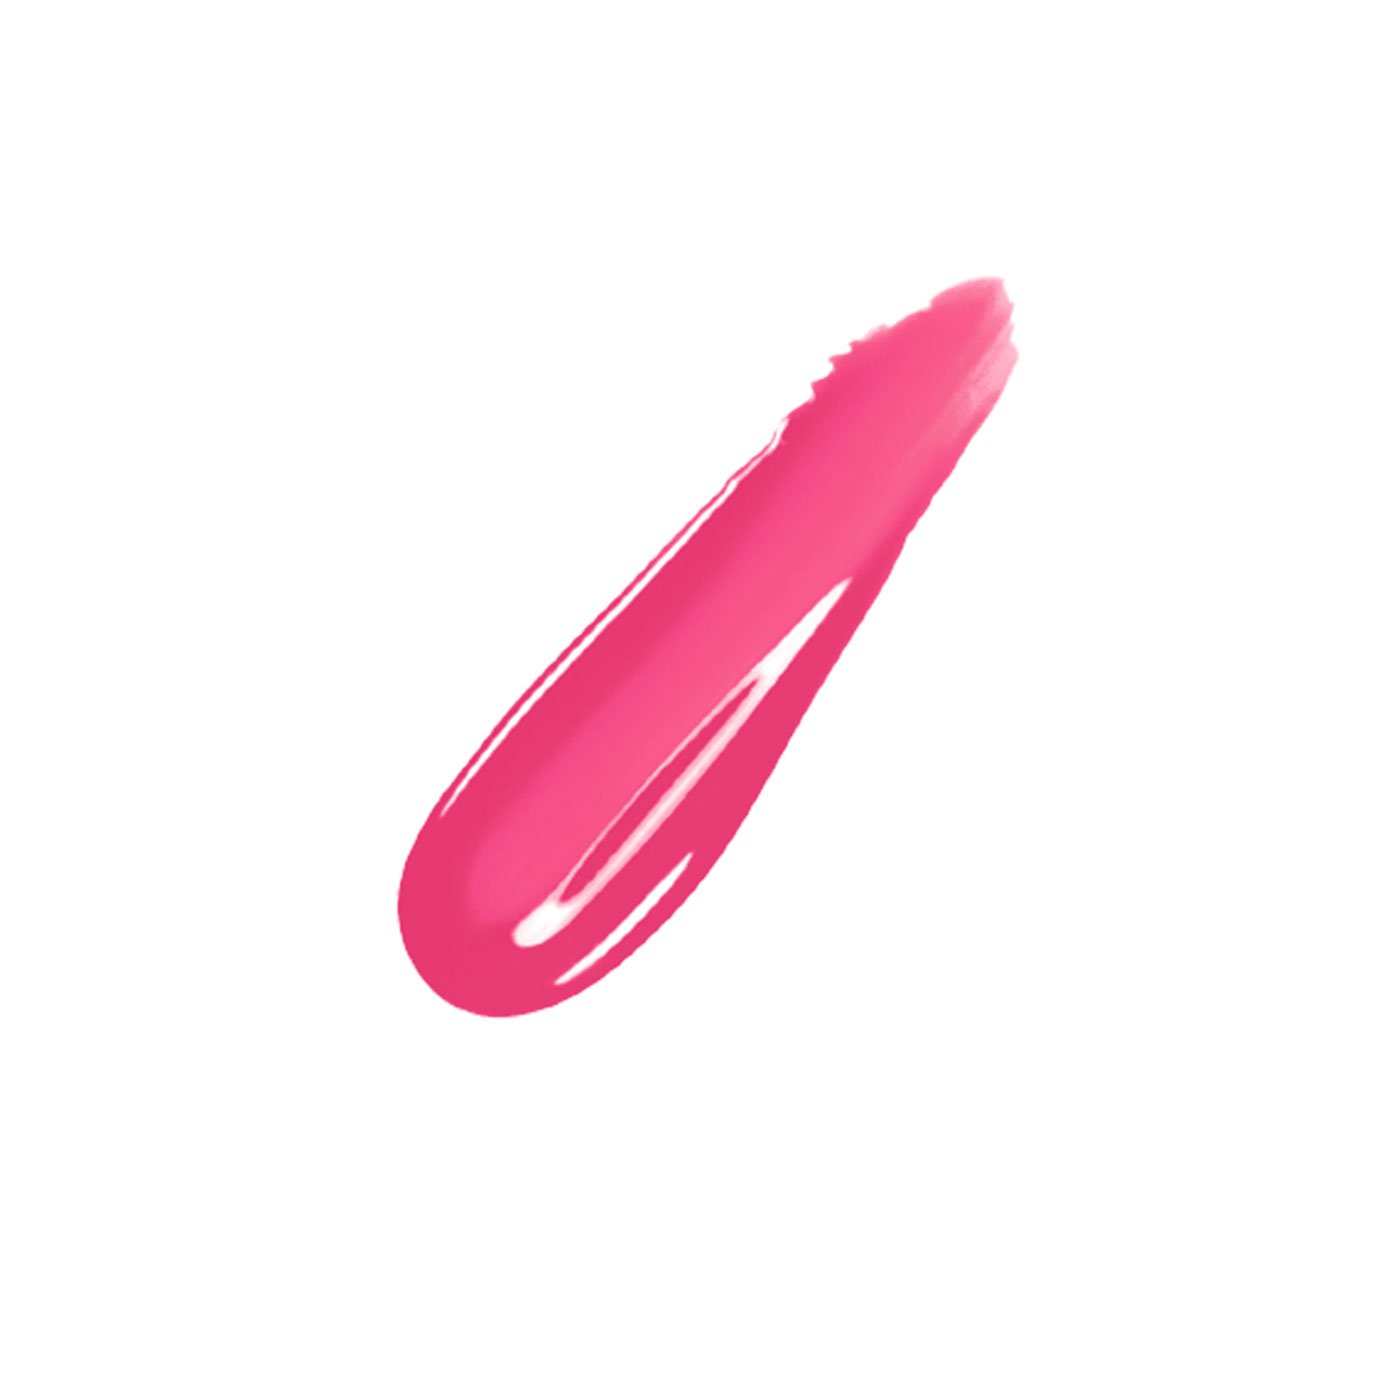 Fantasy hot pink liquid lipstick swatch